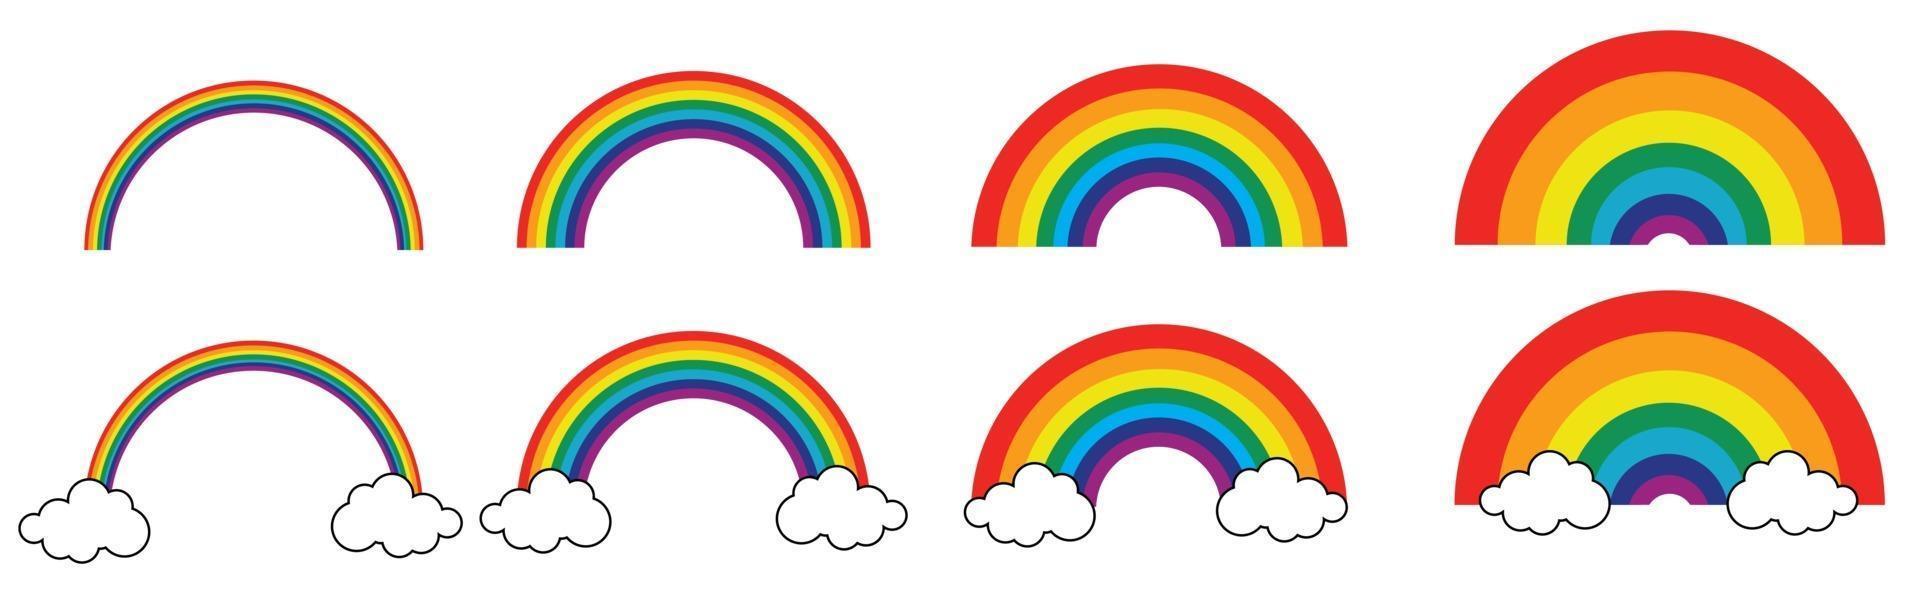 Conjunto de iconos de arco iris de colores. colección arcoiris clásico. vector